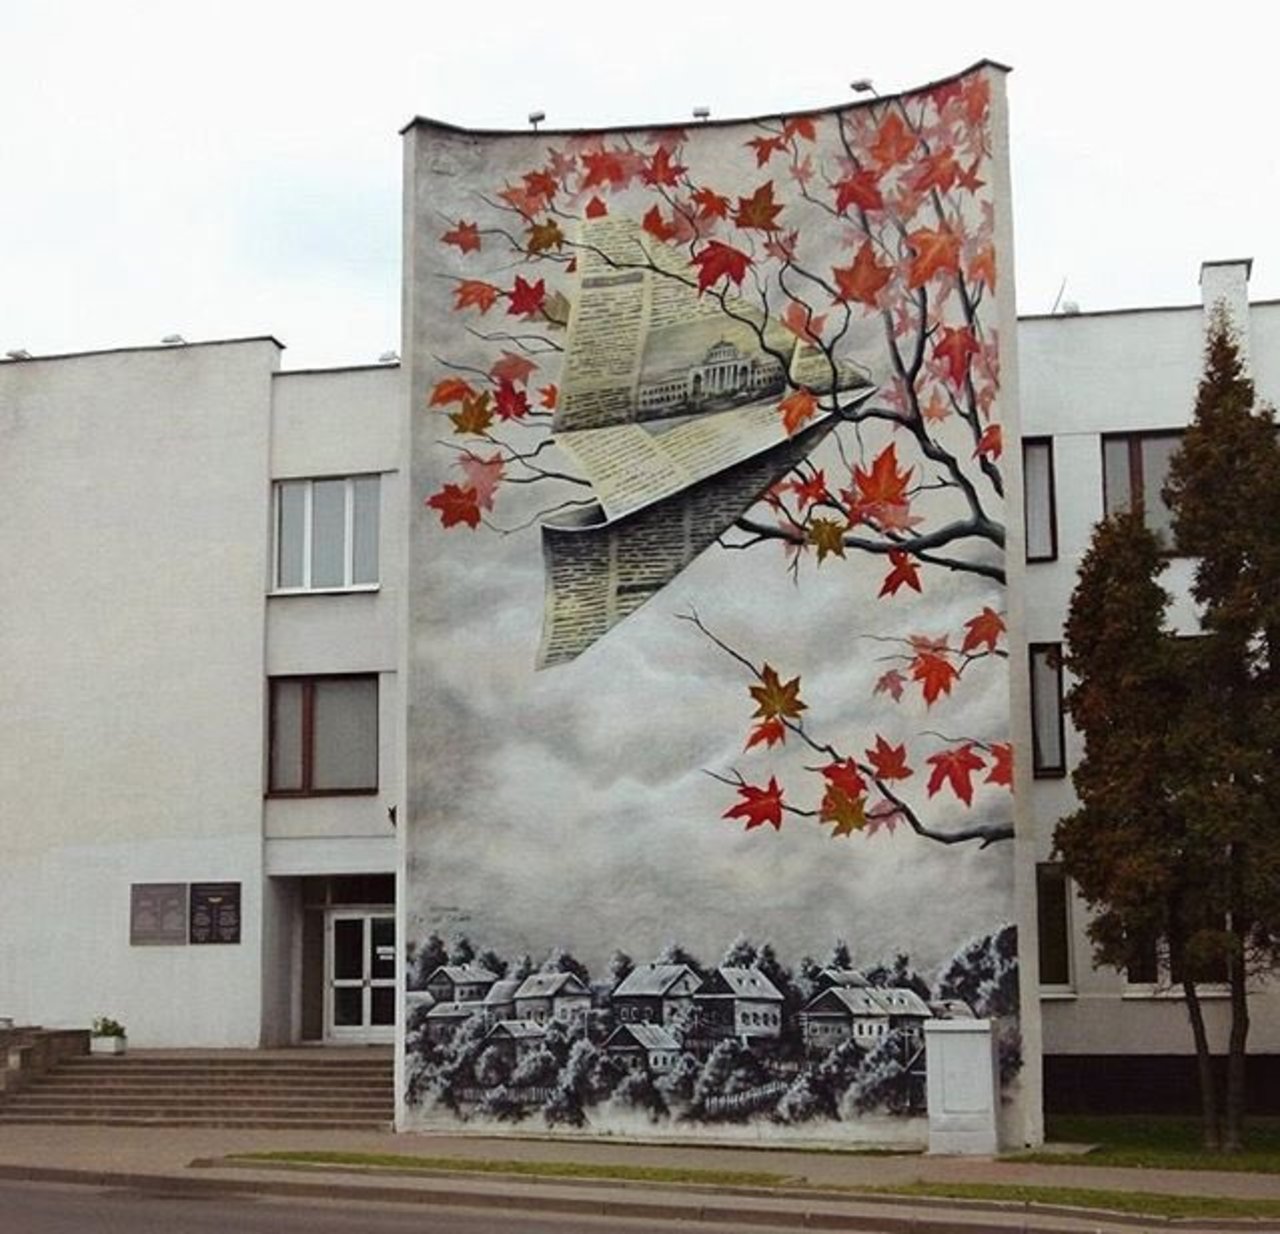 New Street Art by MUTUS in Belarus 

#art #graffiti #mural #streetart https://t.co/hWpPyv8dRd